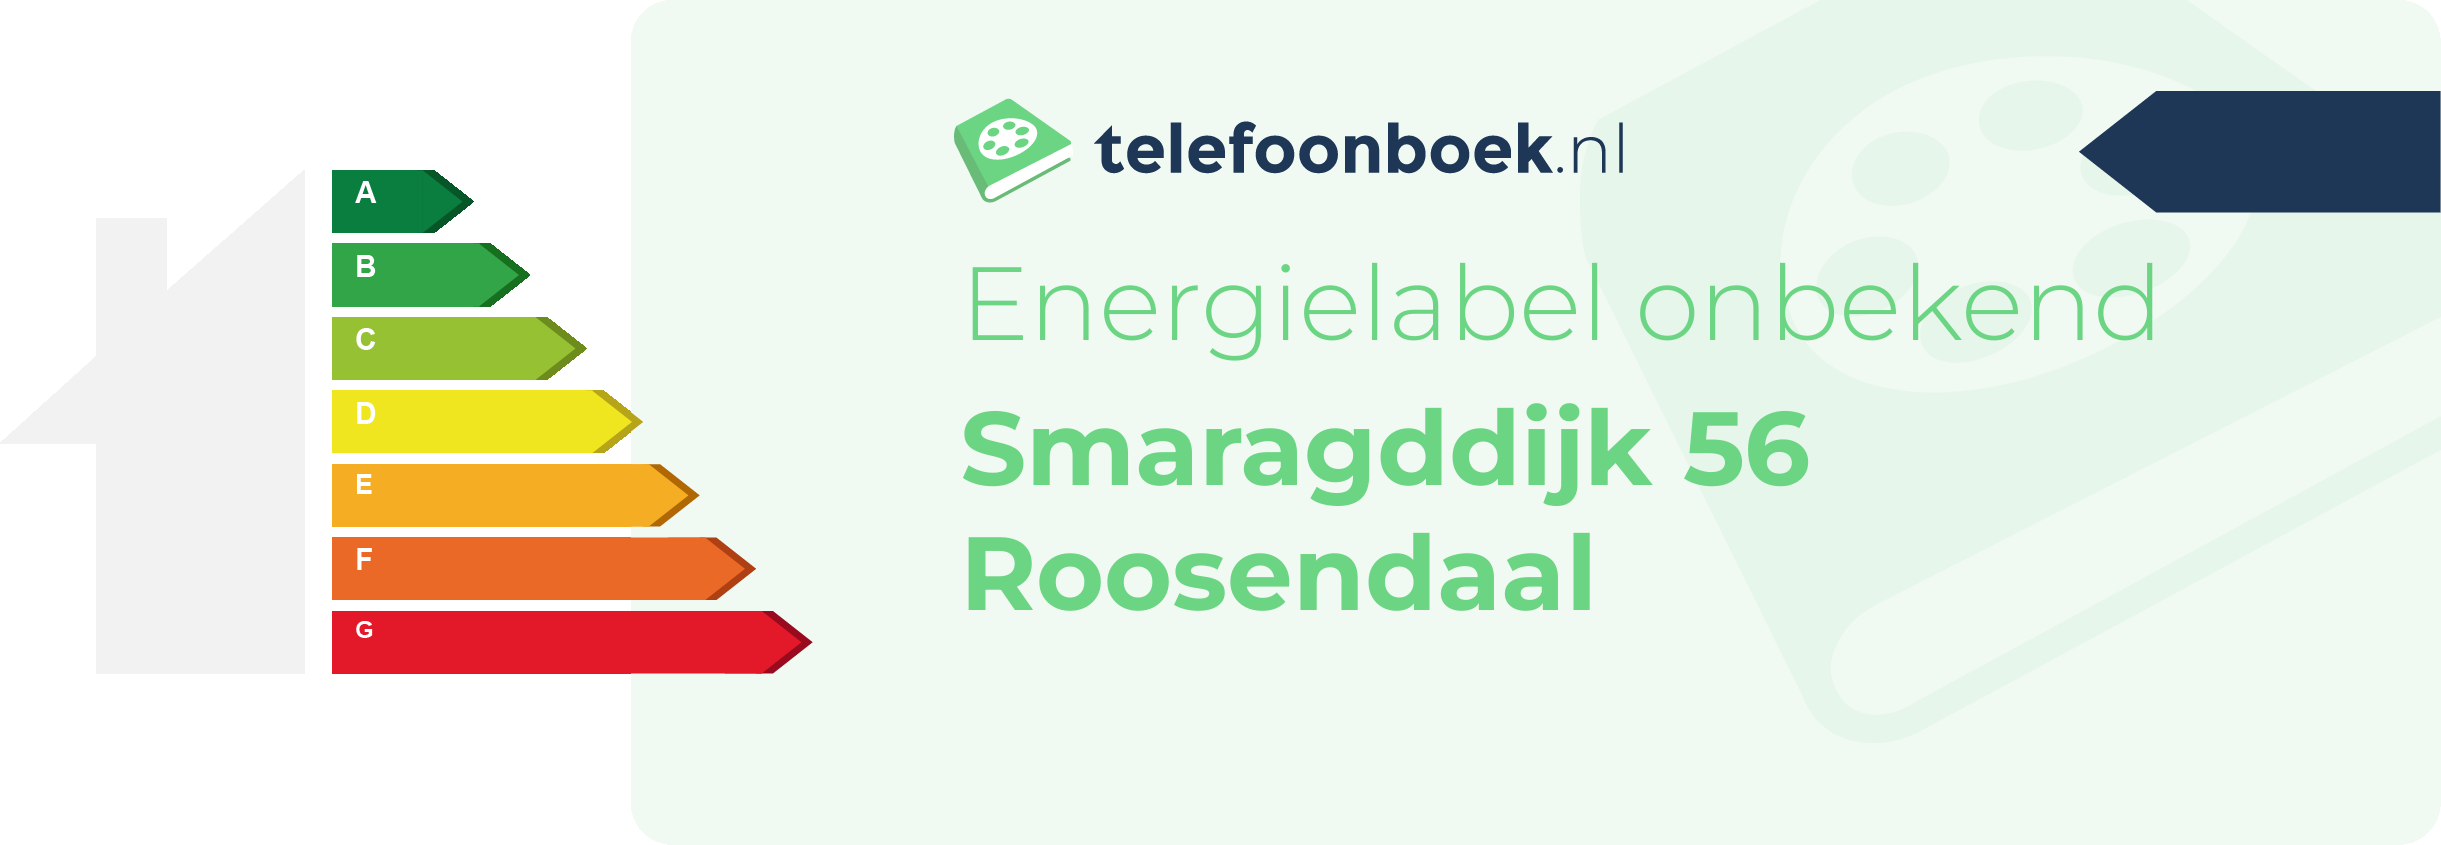 Energielabel Smaragddijk 56 Roosendaal